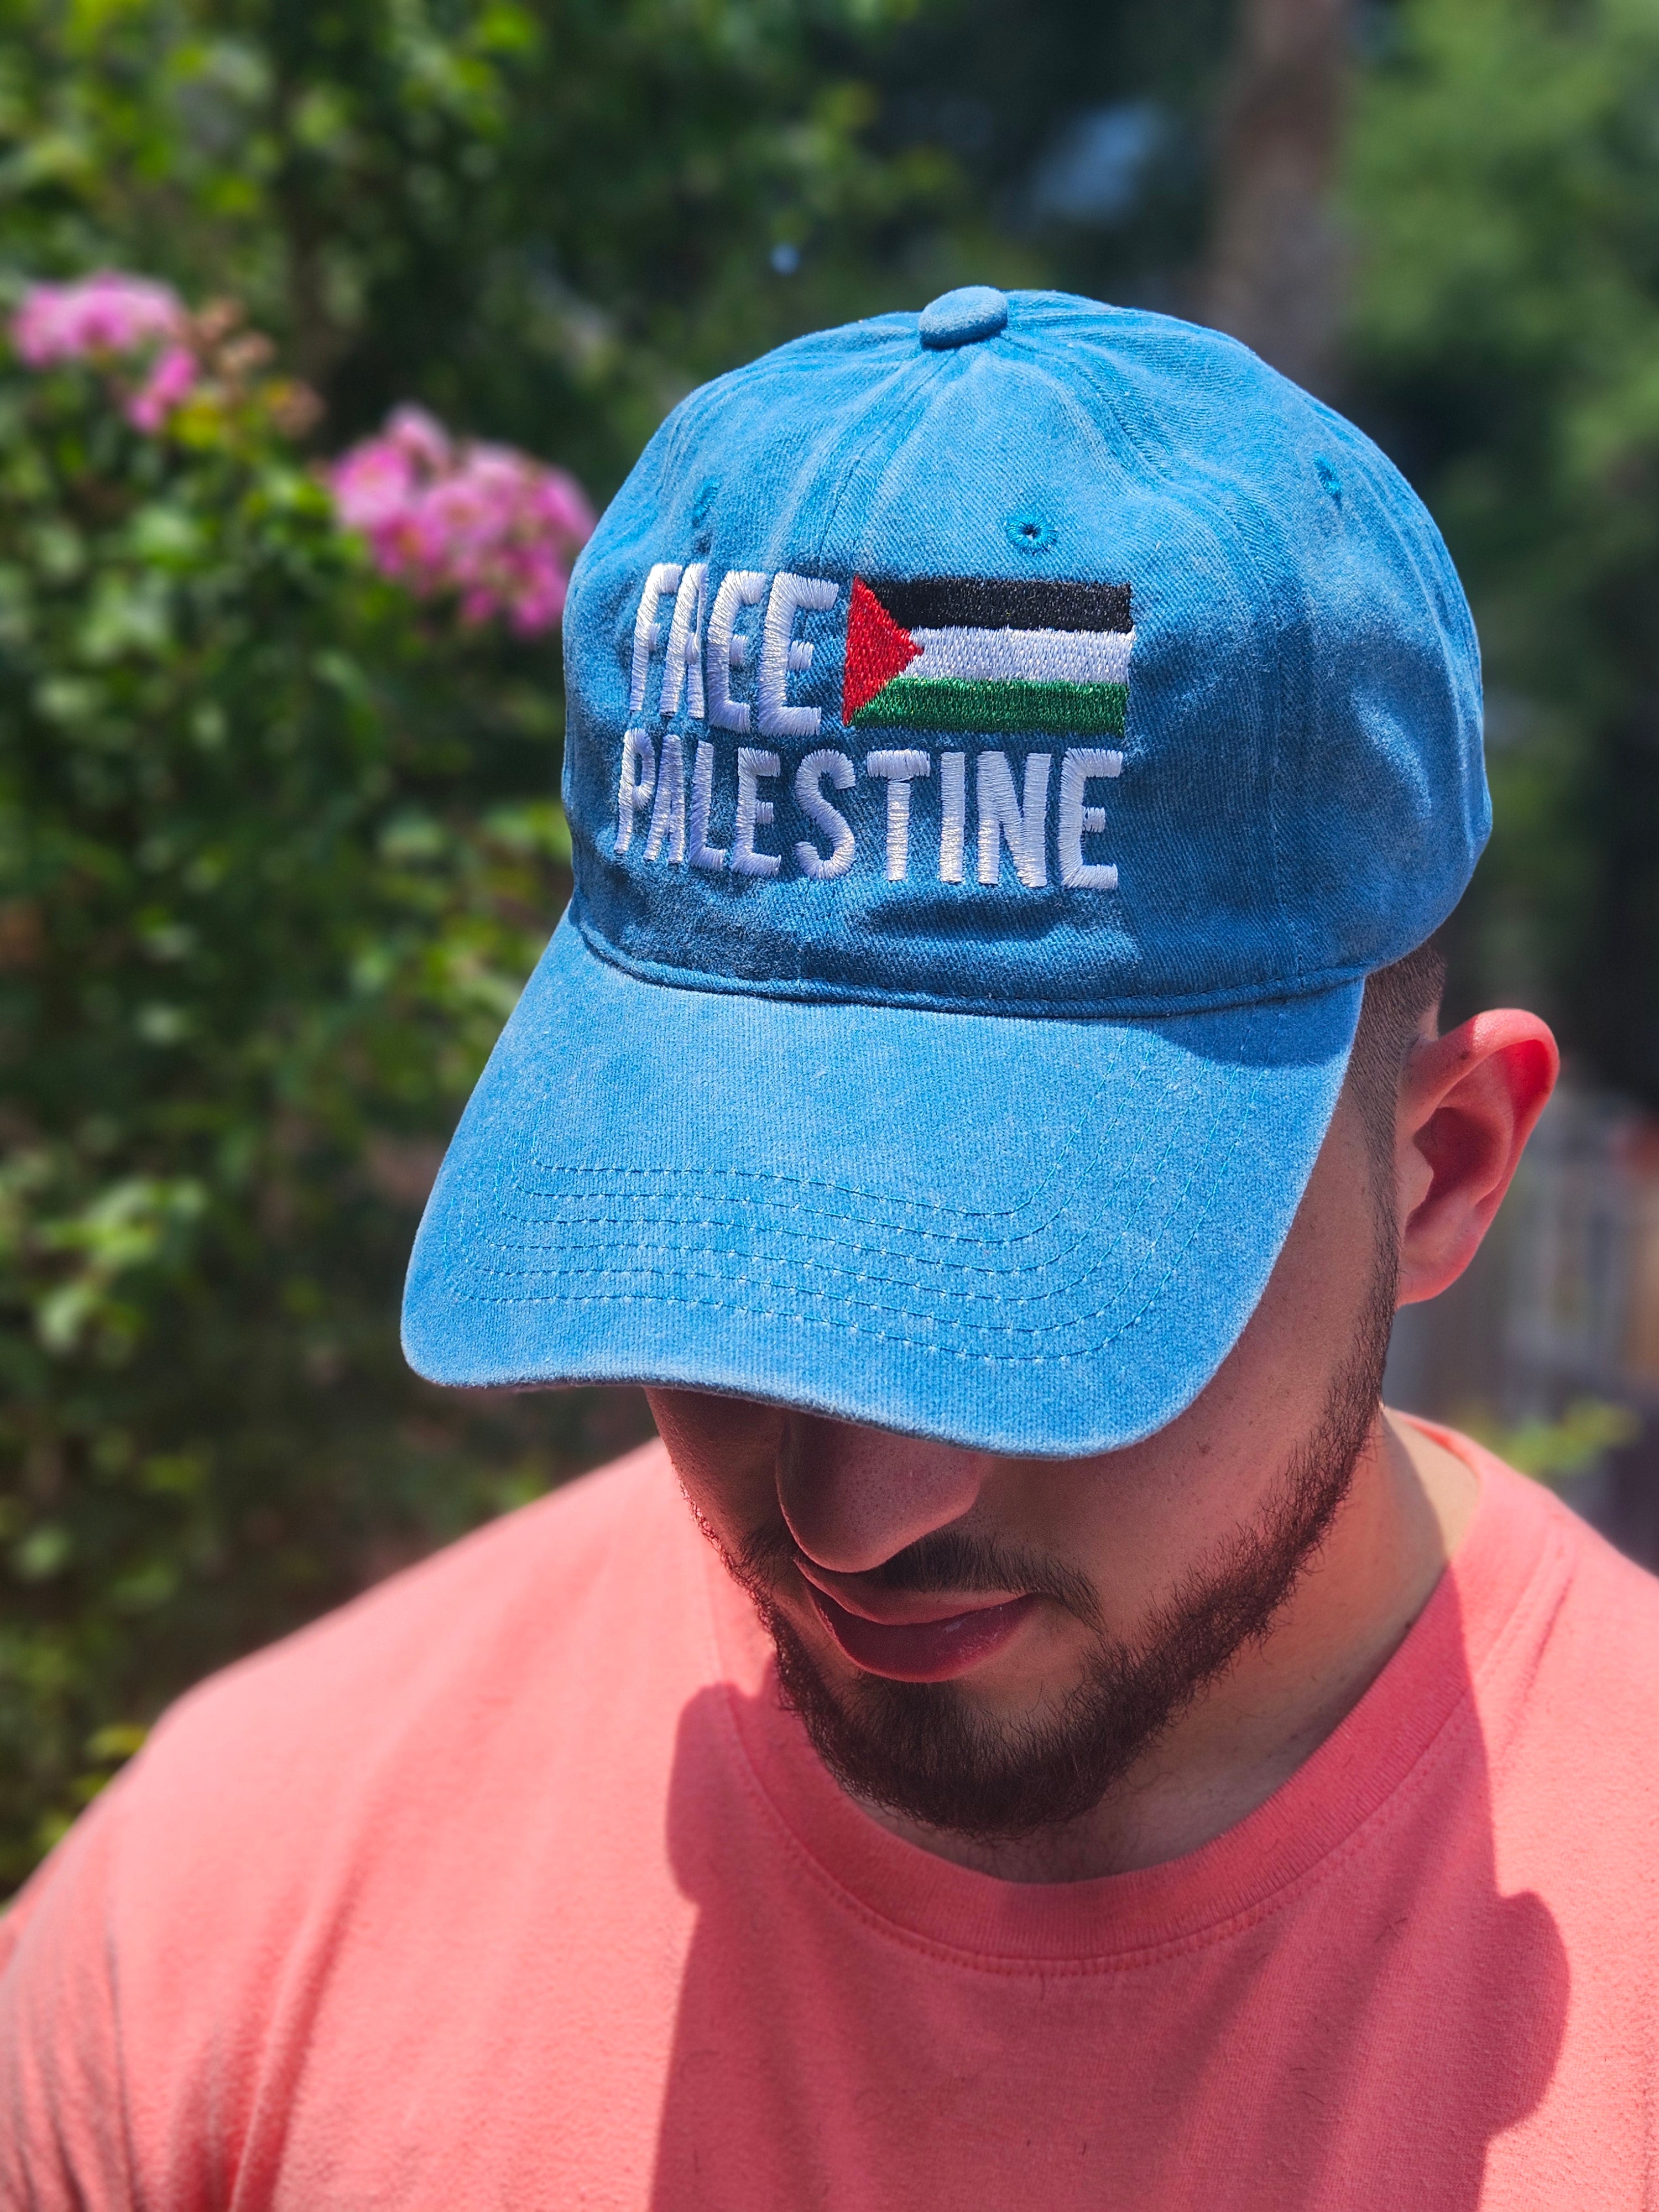 Free Palestine Hat Baseball Cap